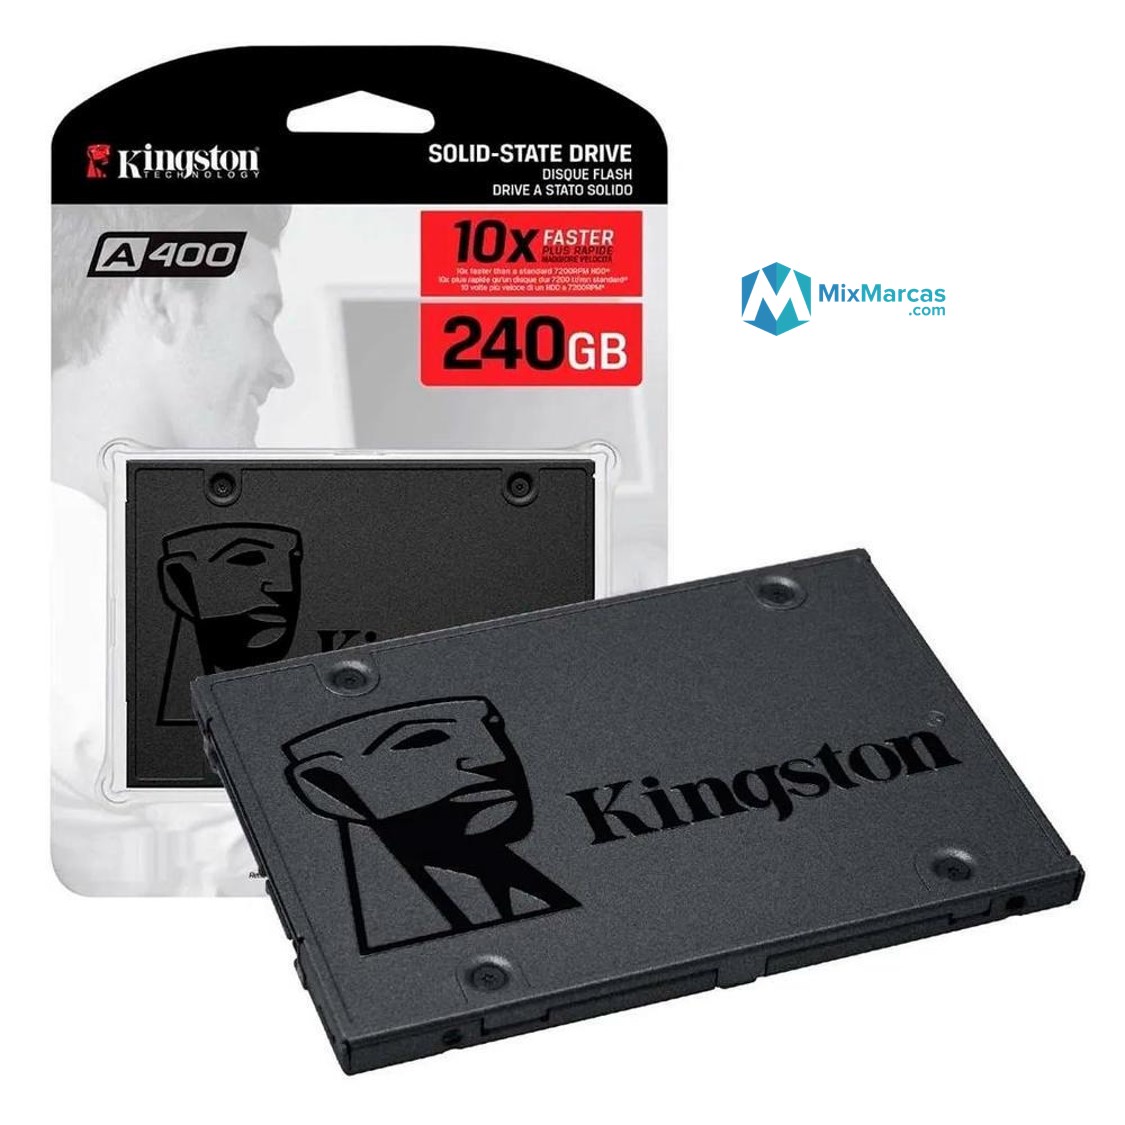 Comprar SSD Kingston A400 - 240GB - SATA - Sa400s37/240g